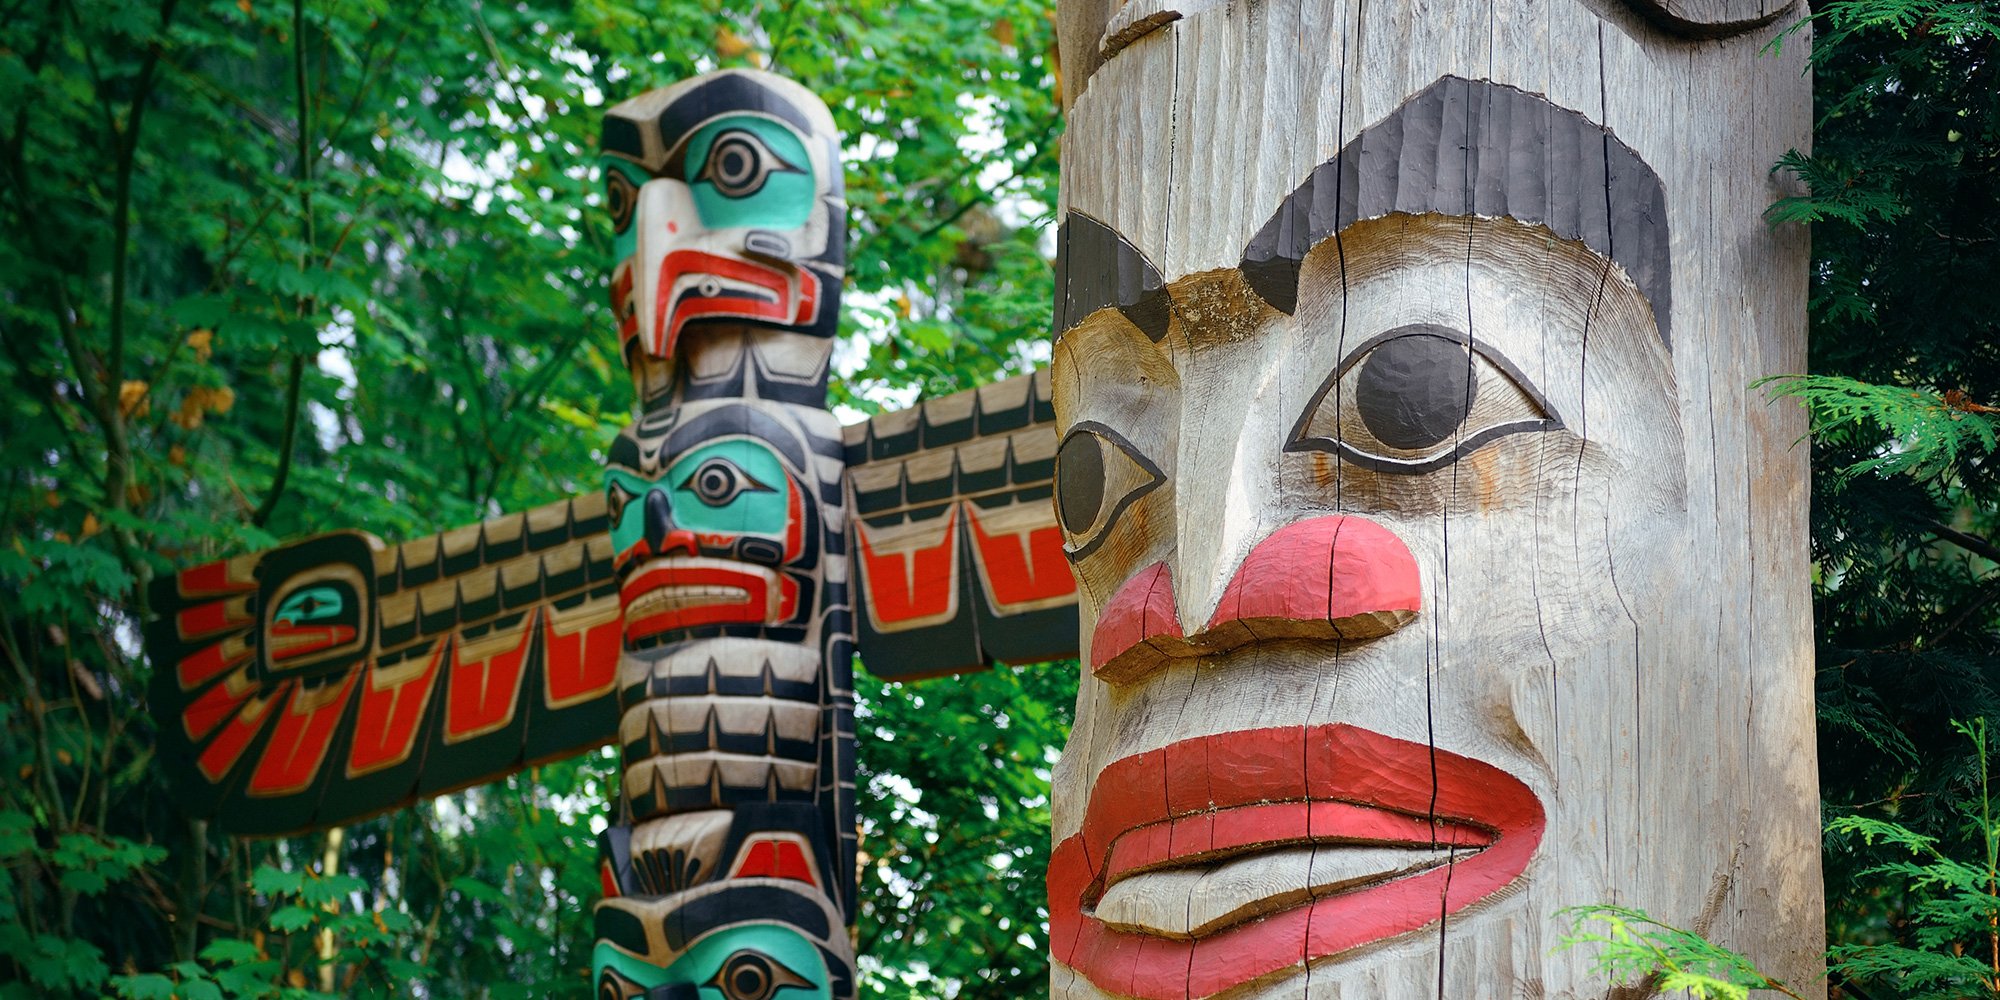 Totem Pole in Capilano park, Vancouver, Canada